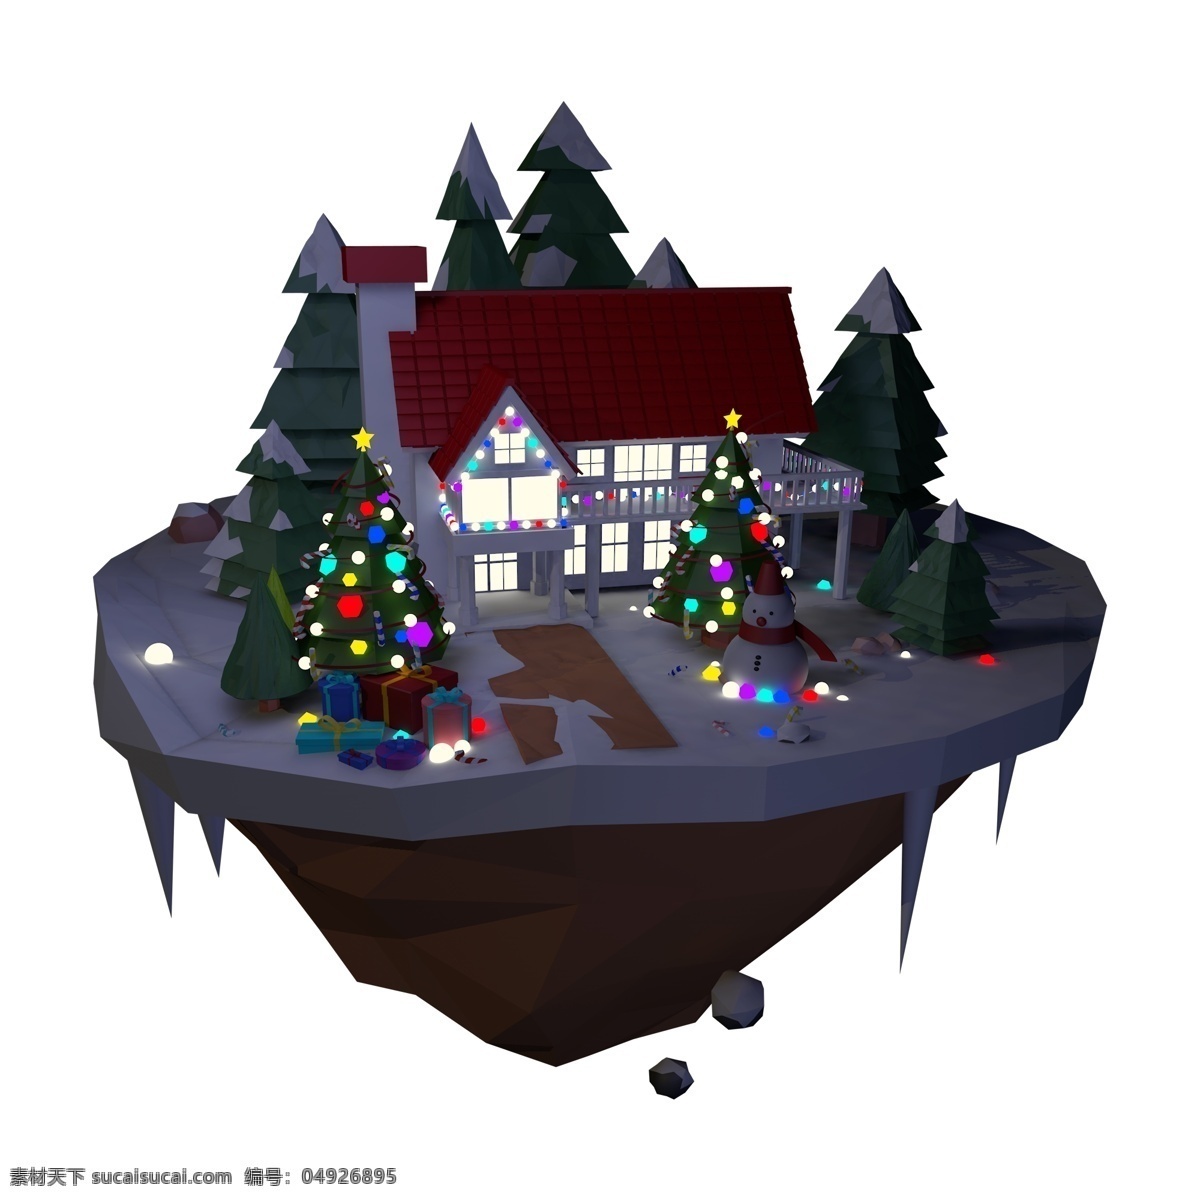 c4d 圣诞 夜 飘浮 小岛 3d 立体 低多边形风格 lowpoly 岛屿 圣诞树 彩色 发光球 雪人 礼盒 小房子 雪地